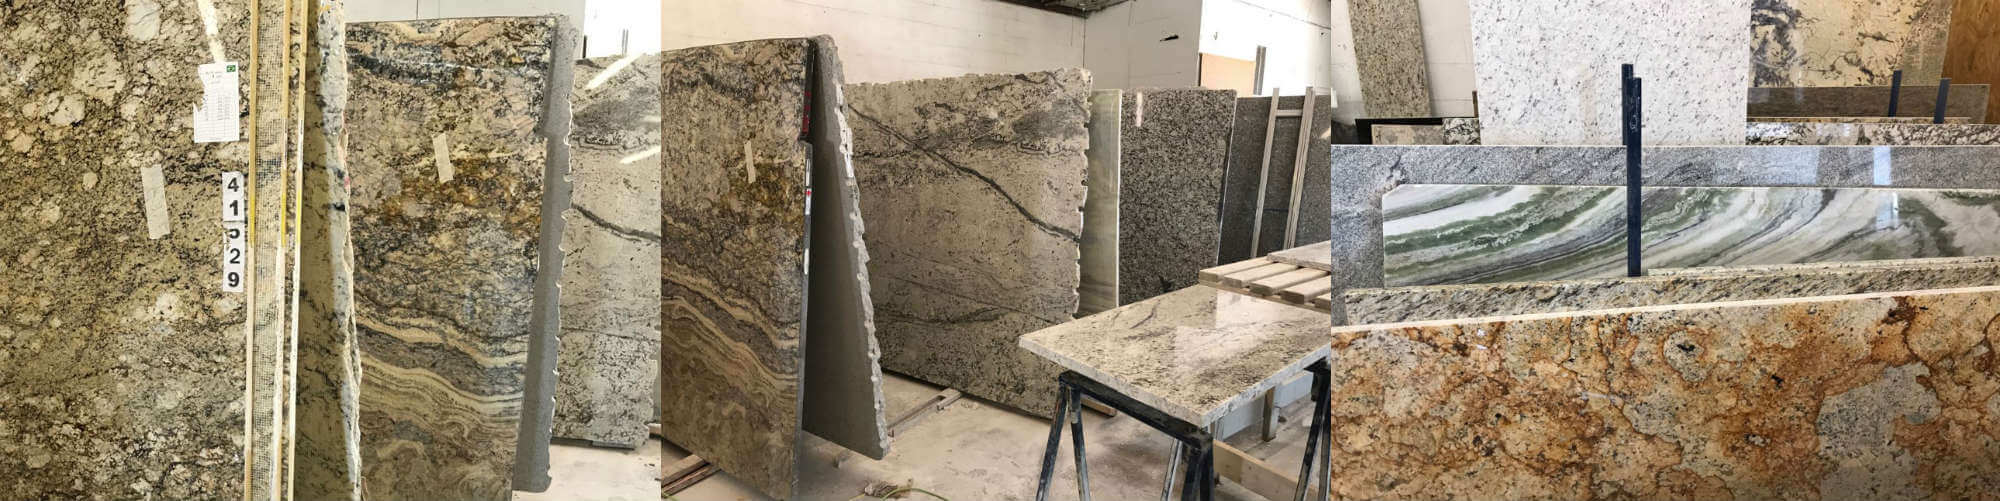 Best Granite Countertops In Cleveland Kitchen Quartz Marble Vanity